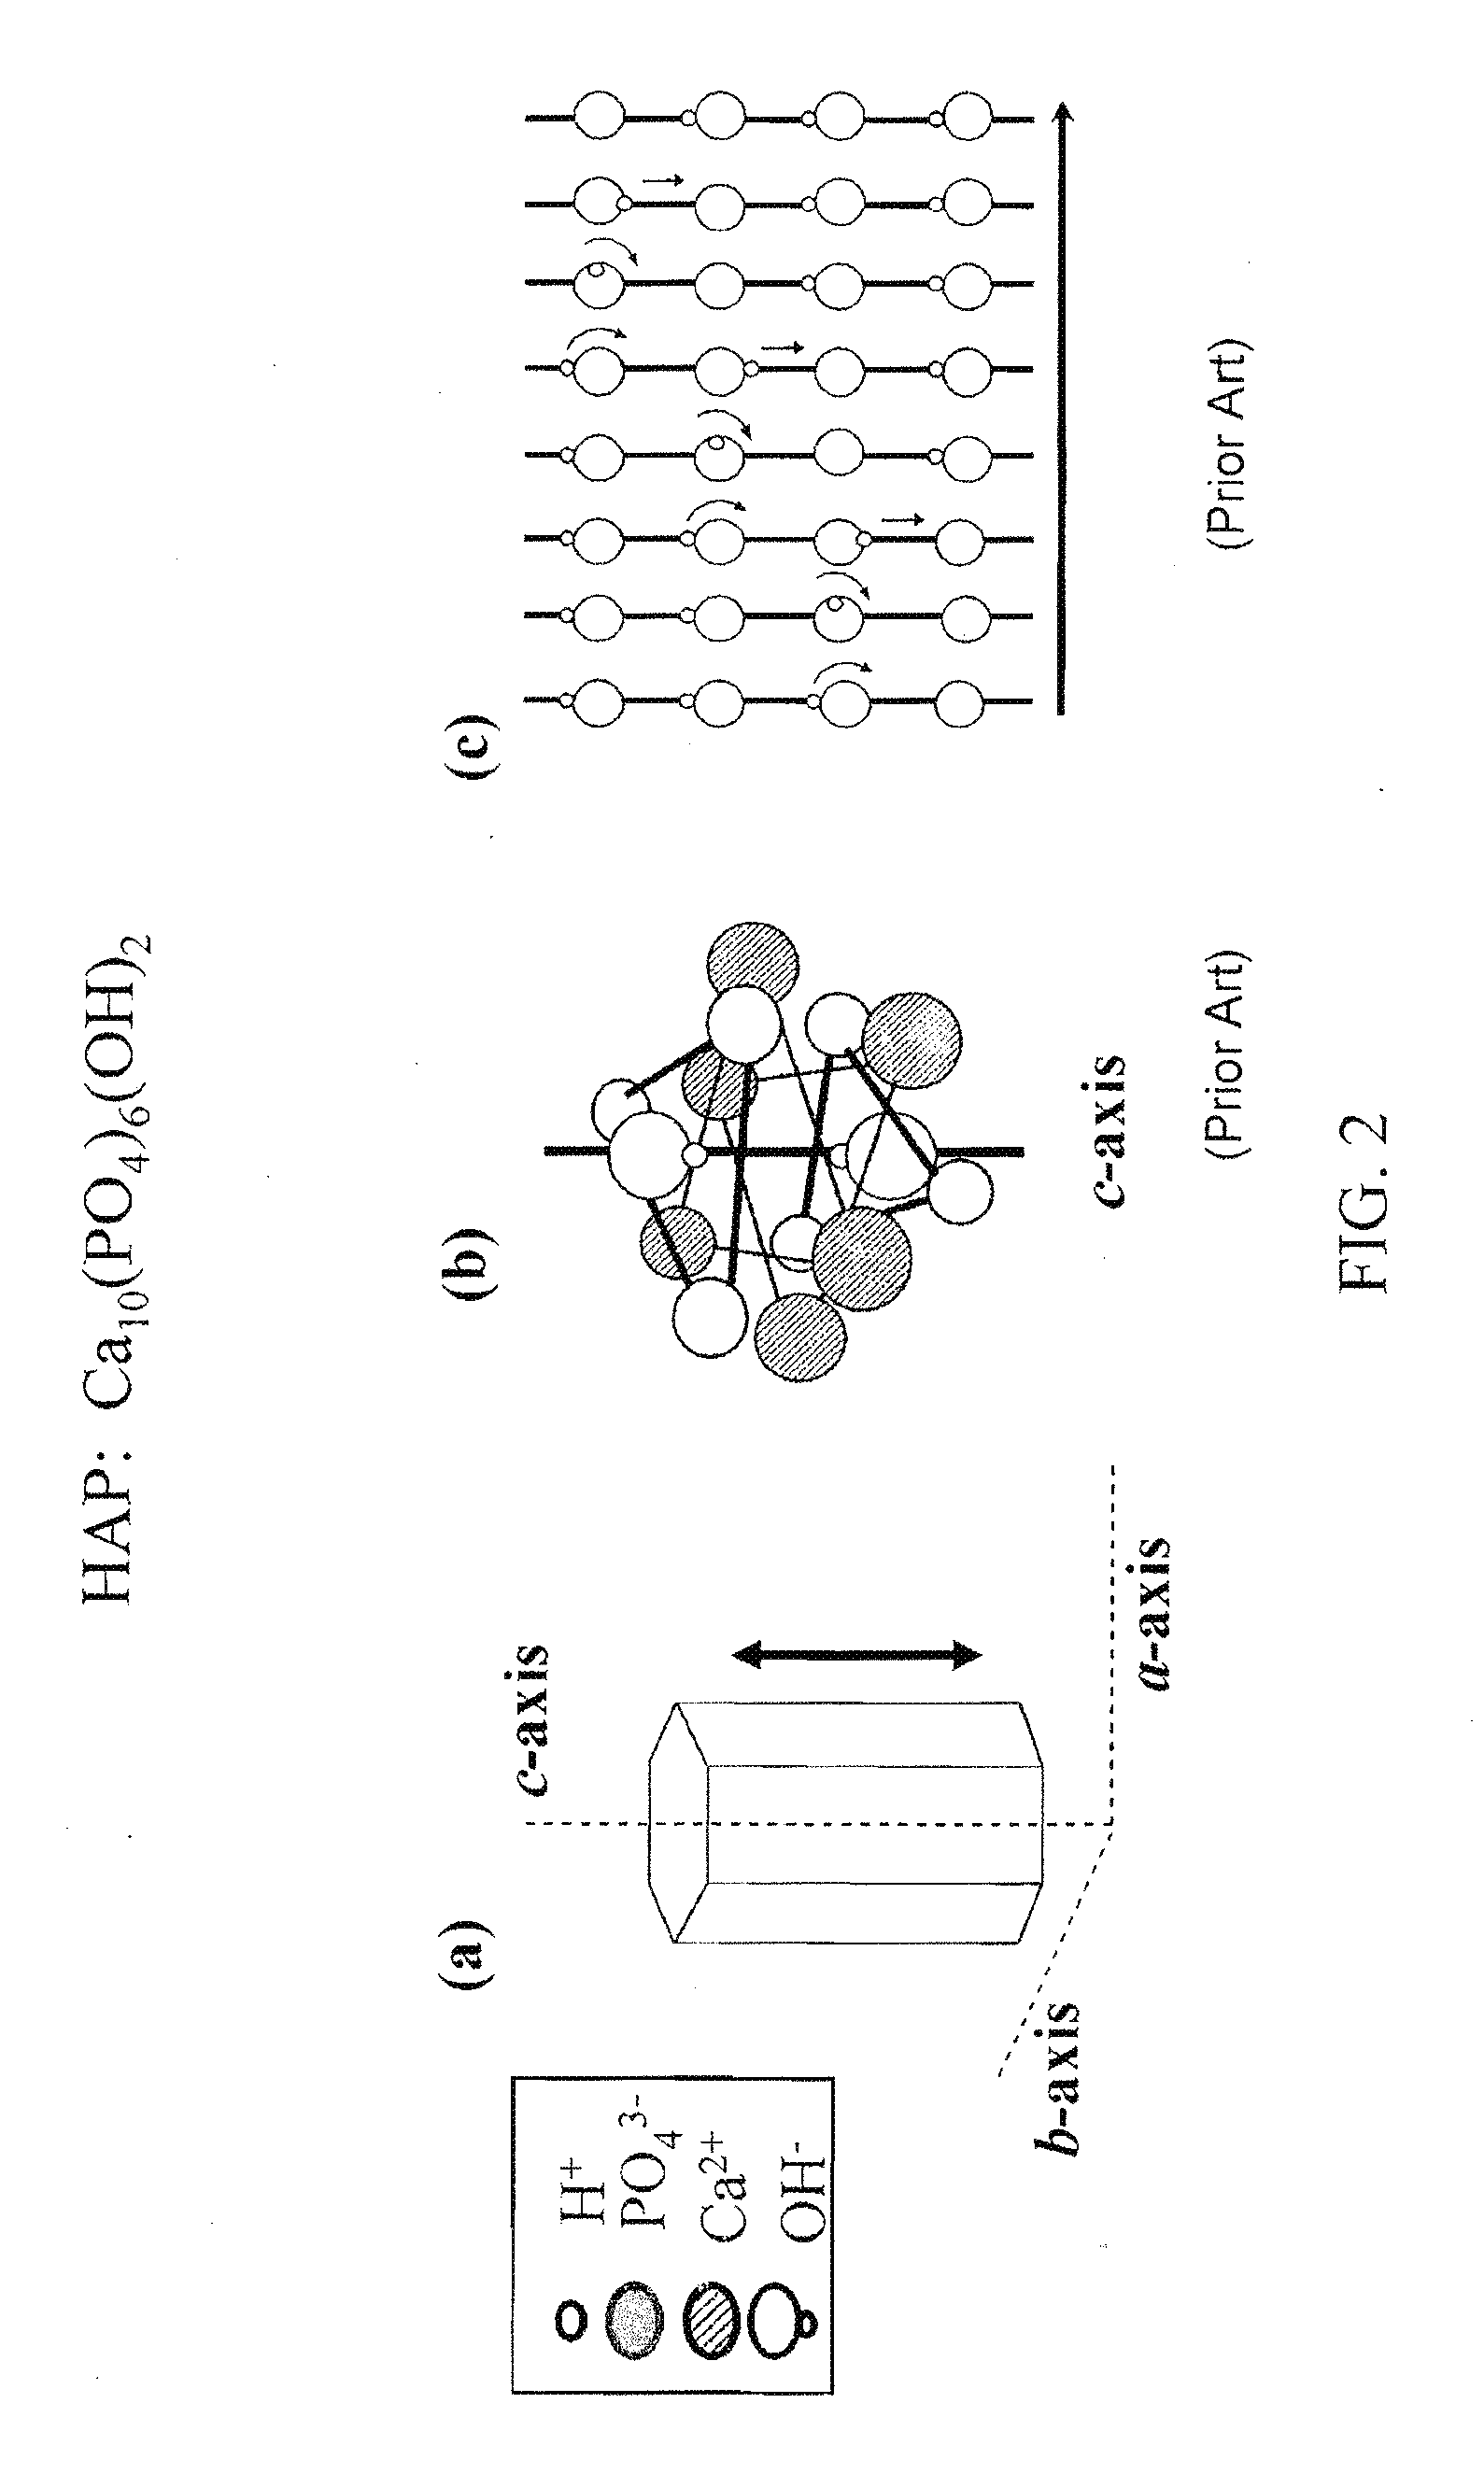 Ion/proton-conducting apparatus and method